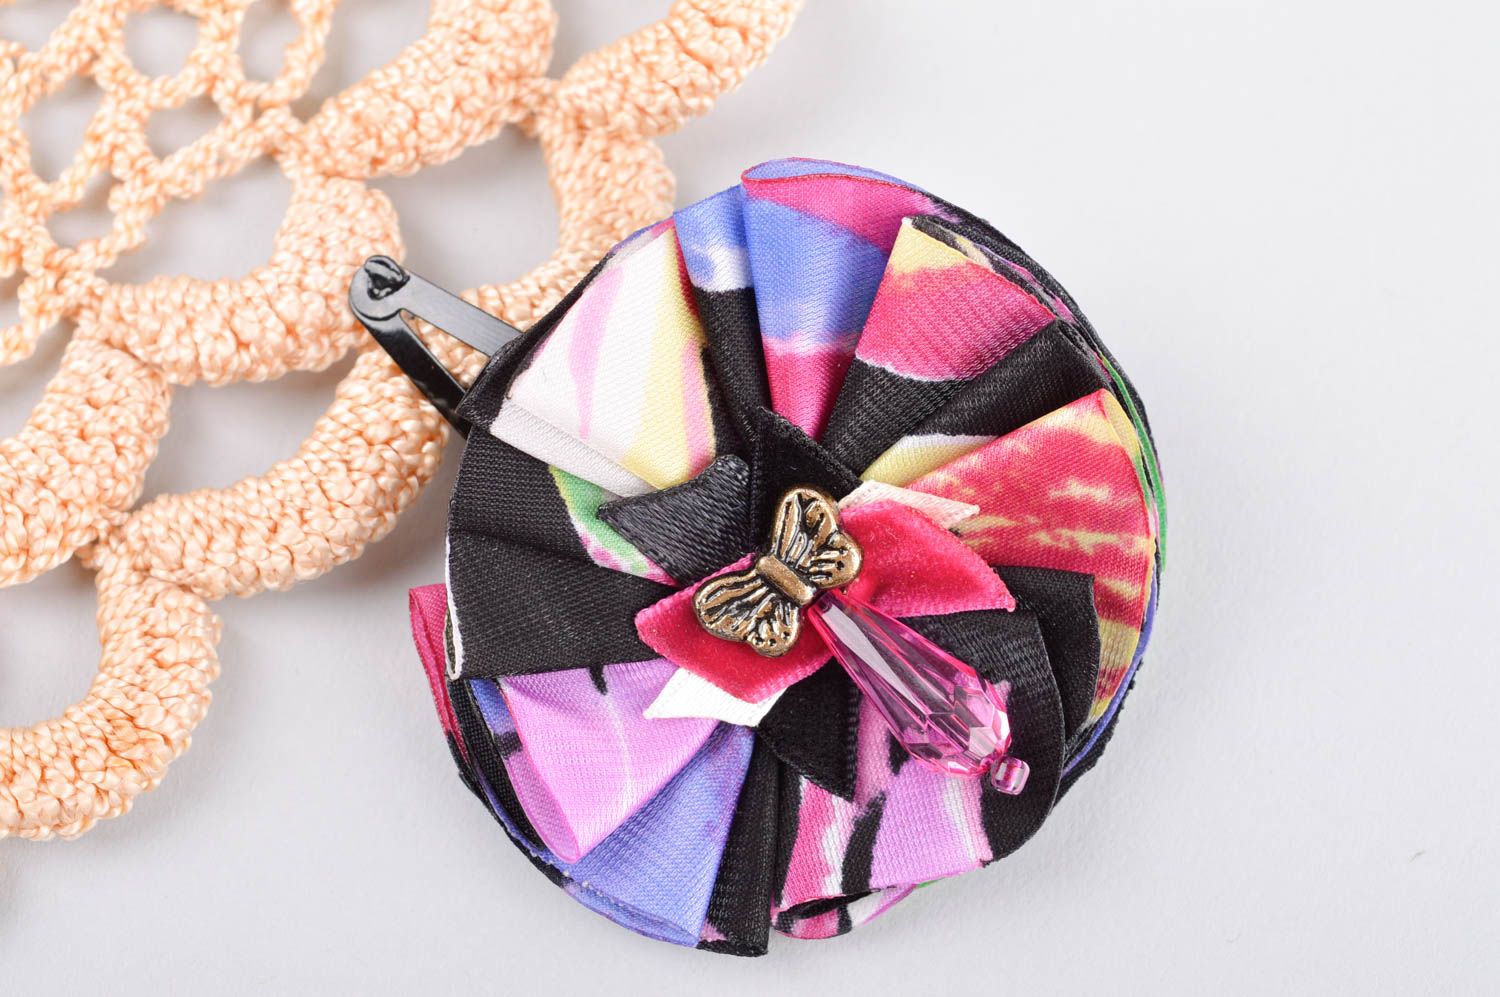 Handmade flower hair clip hair accessories for girls fabric flowers gift ideas photo 1